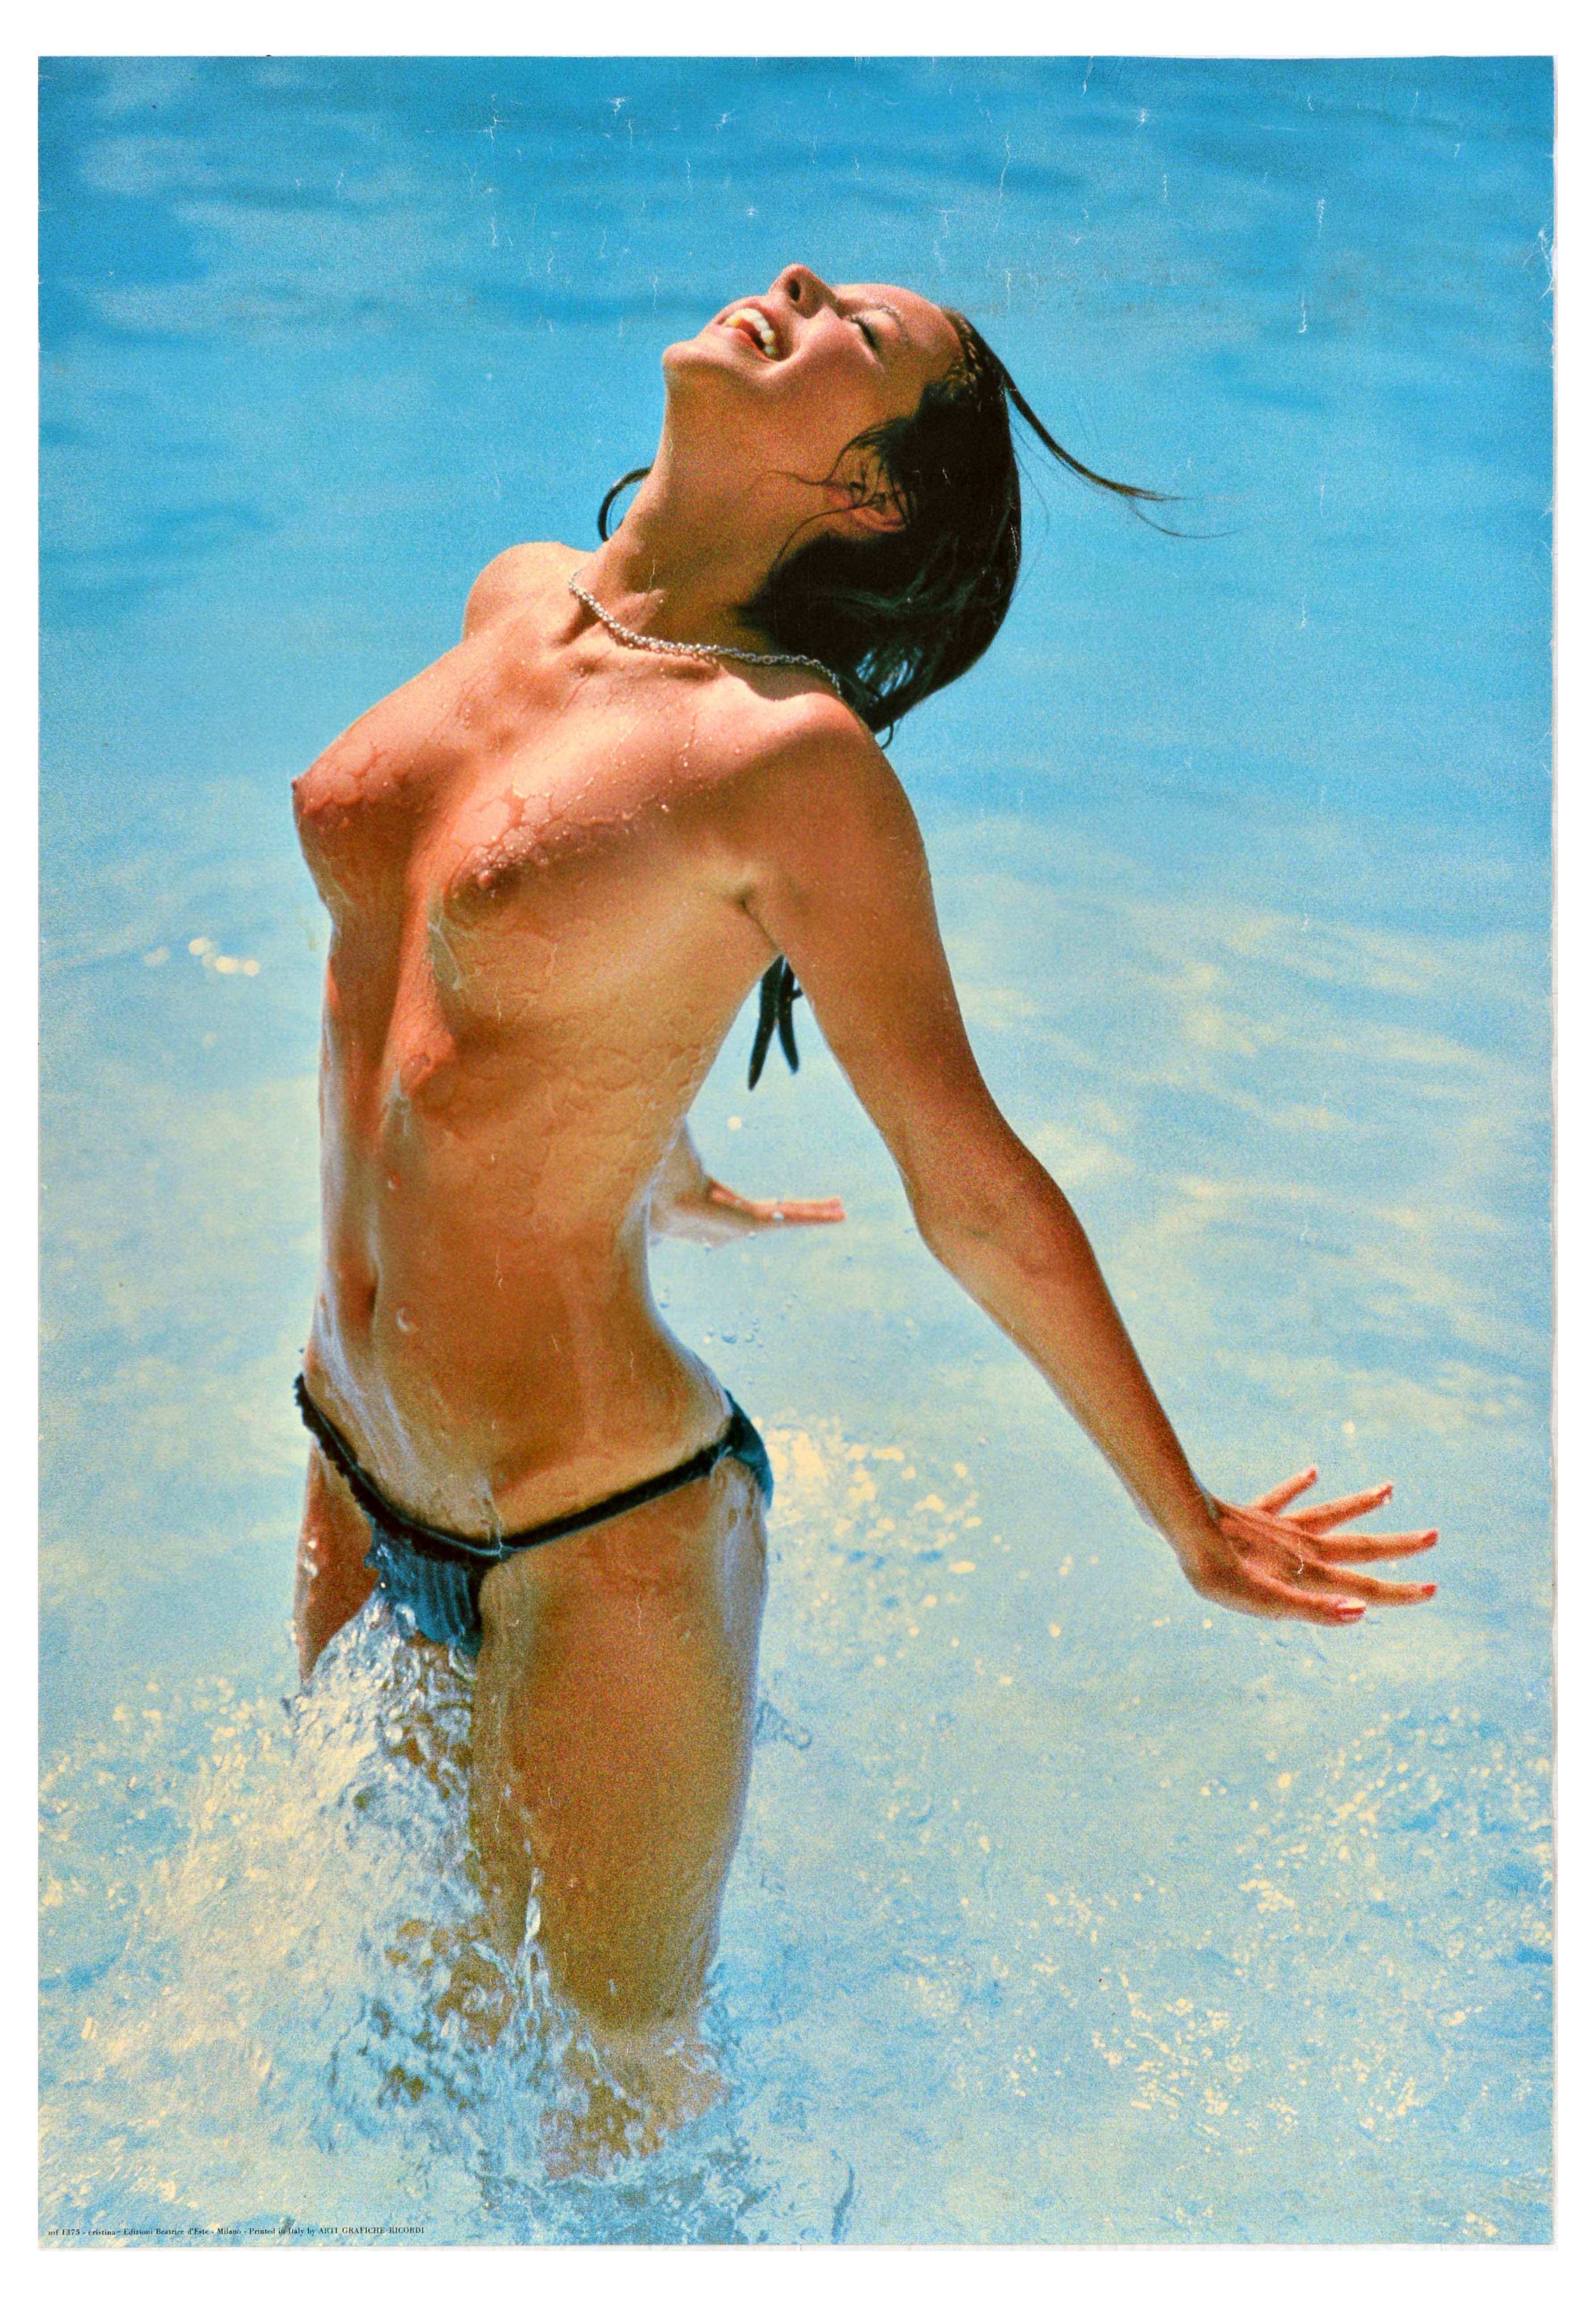 Topless Nude Women Erotic Poster Set - Image 5 of 6